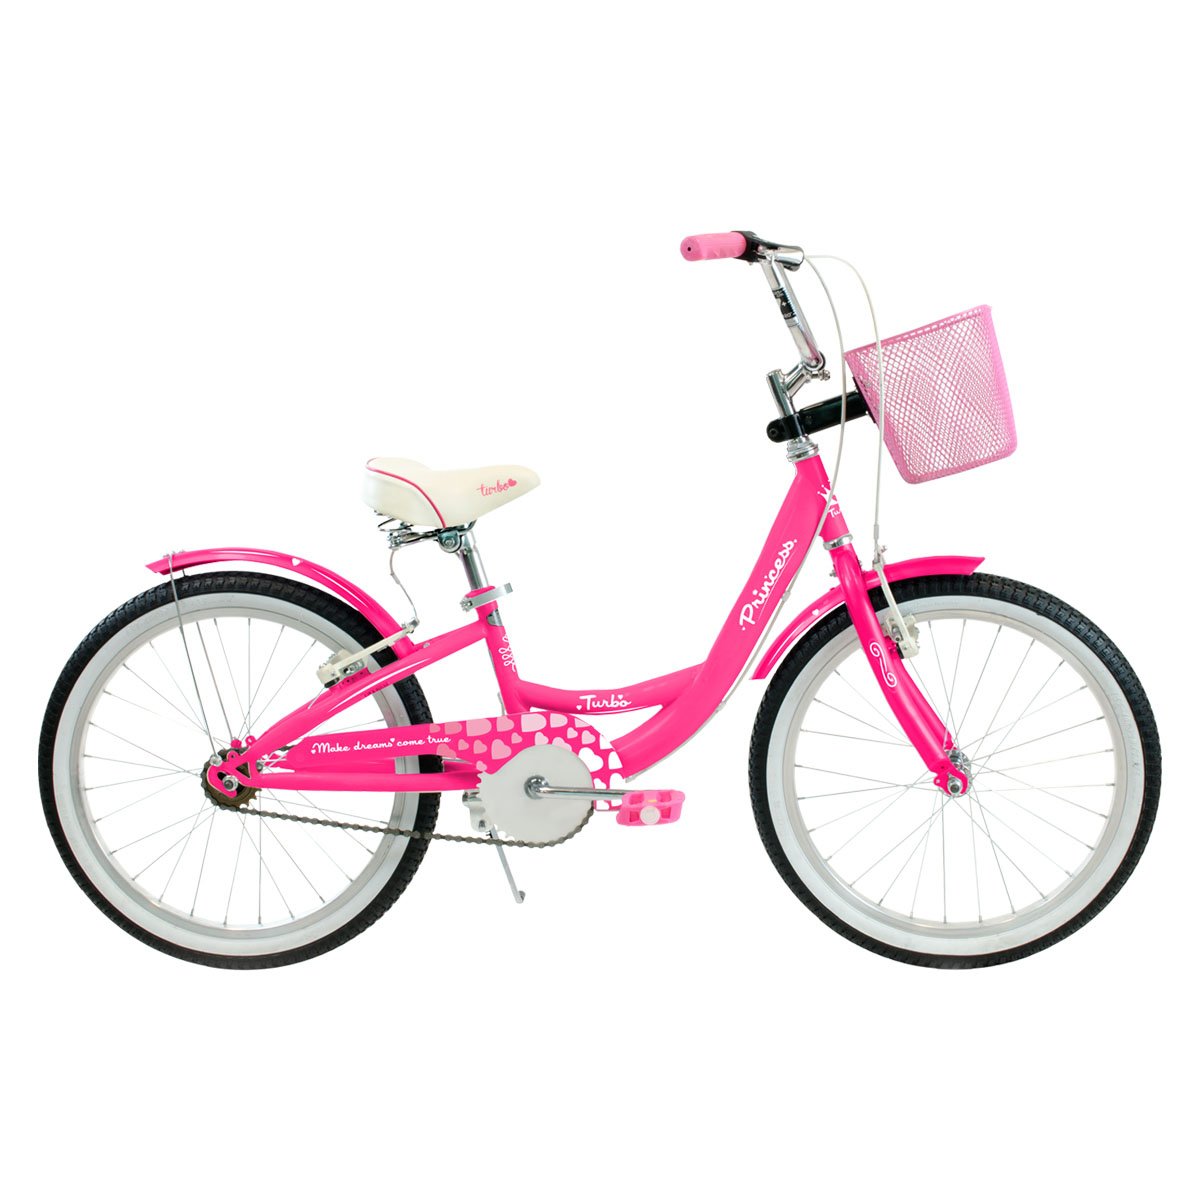 Bicicleta Princess Rosa R20 Turbo